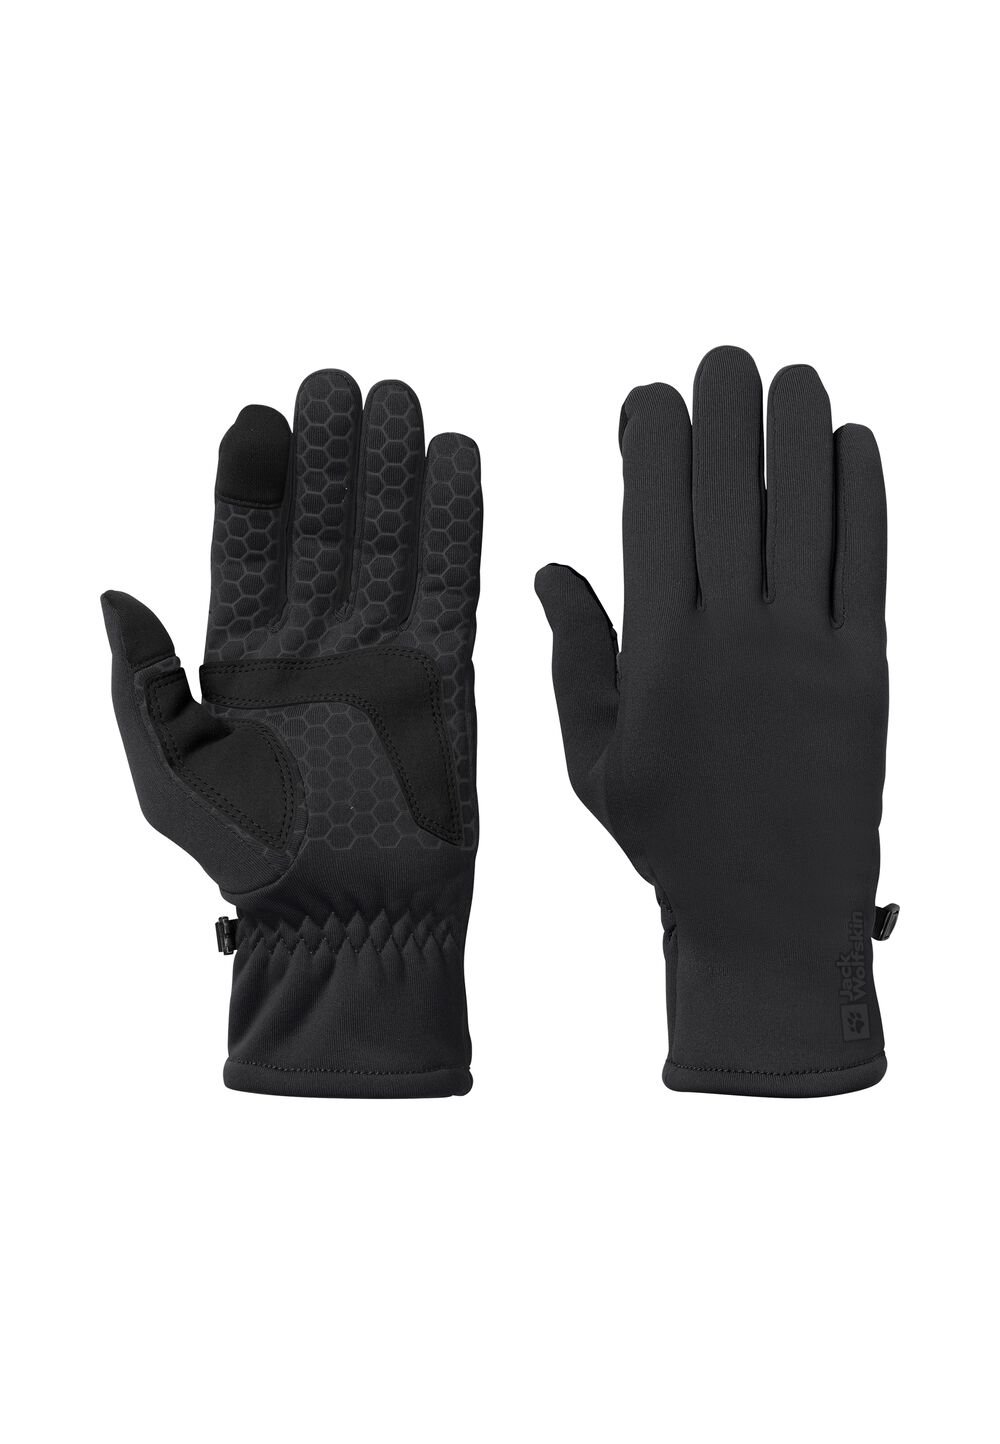 Jack Wolfskin Allrounder Glove Fleece handschoenen S zwart black